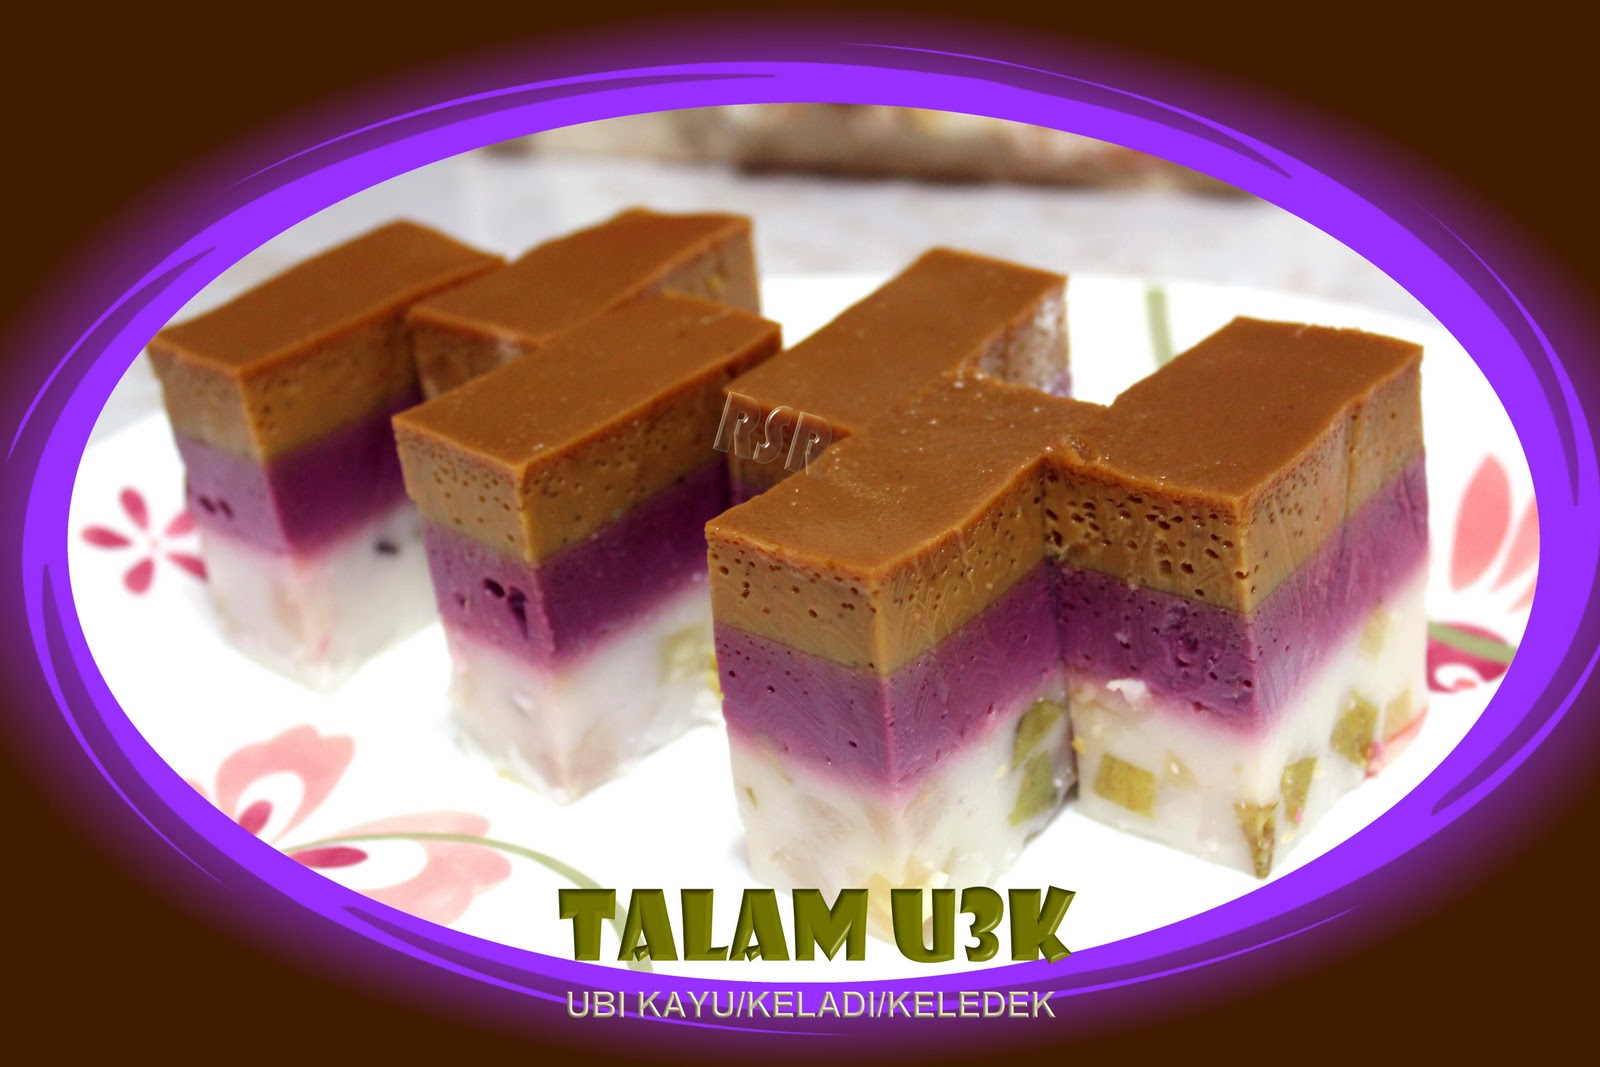 WELCOME TO RSR: TALAM U3K